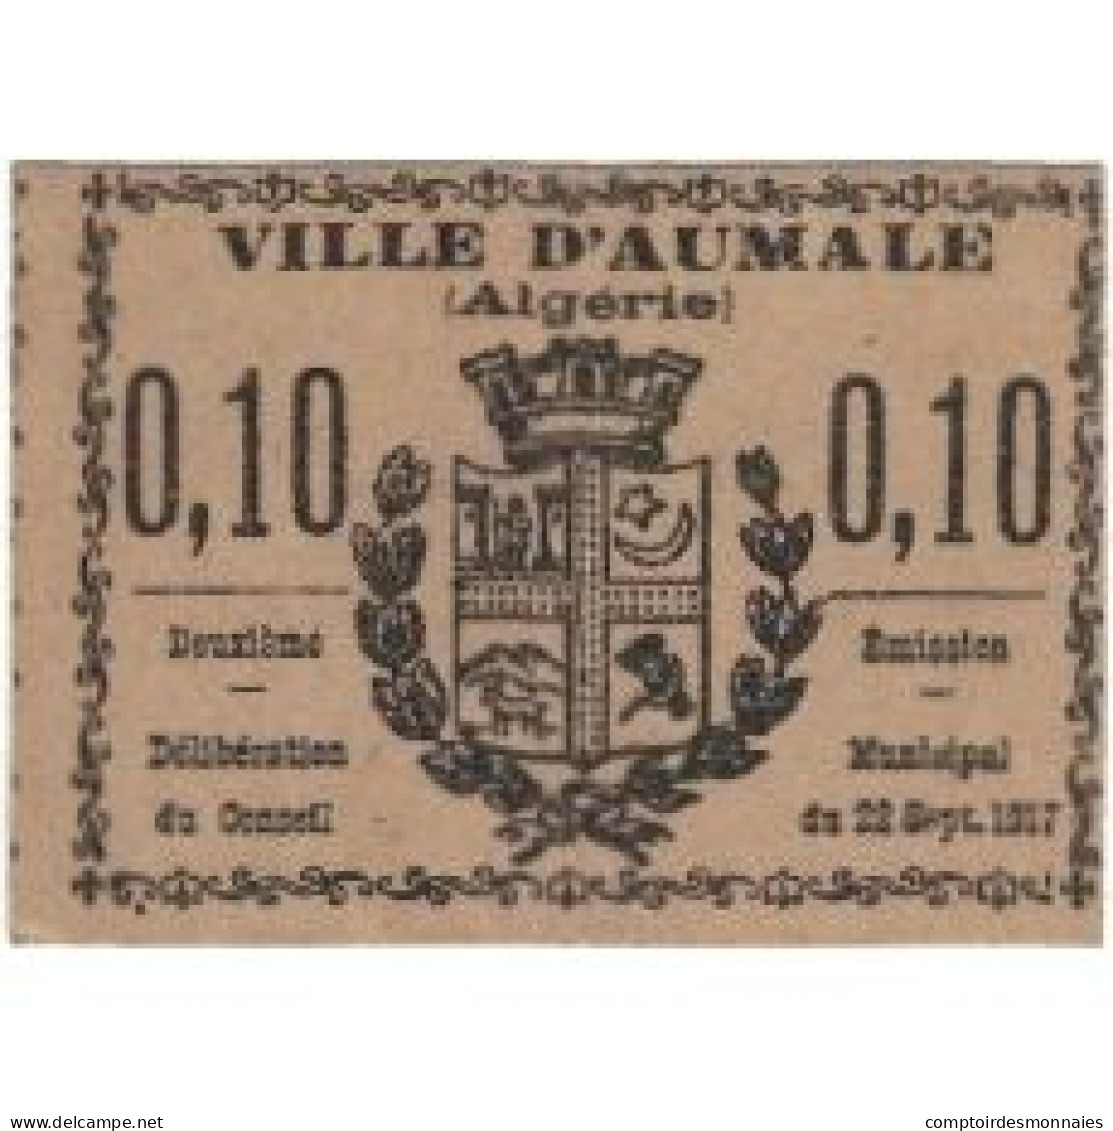 Billet, Algeria, 10 Centimes, Blason, 1917, 1917-09-22, SPL - Algerien